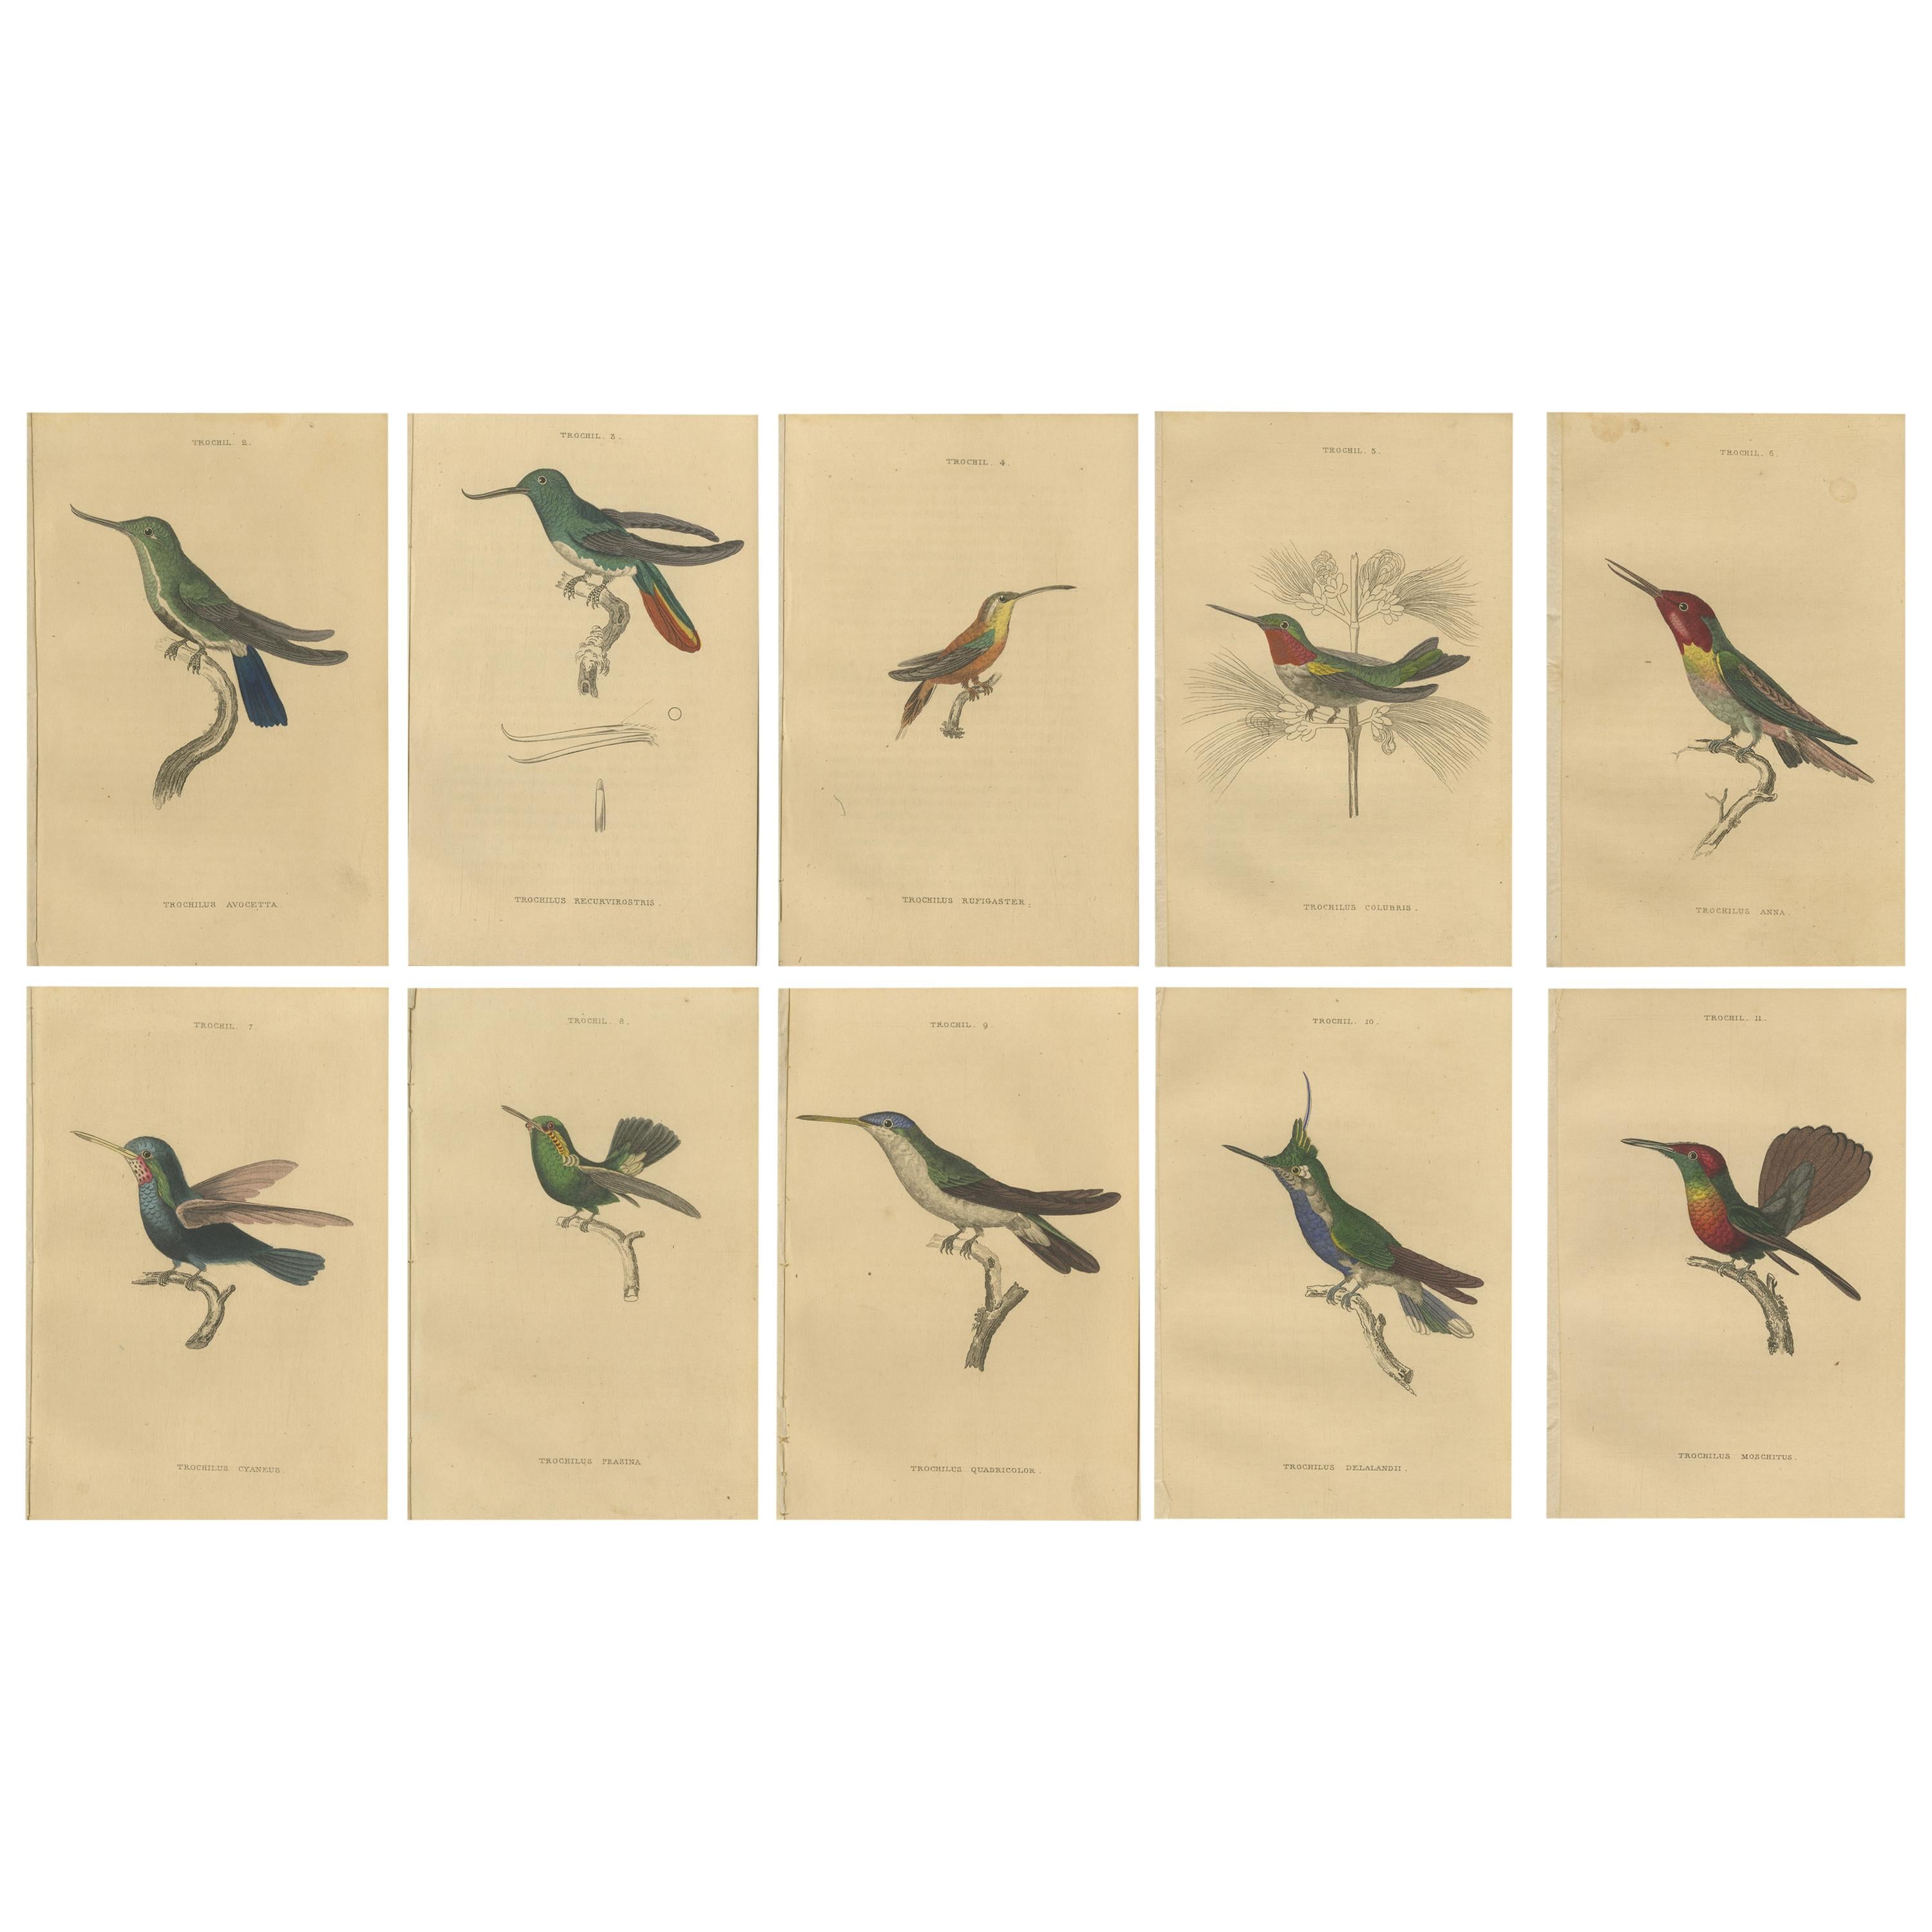 Hummingbird Bird Prints, Handcolored Fiery-Tailed Hummingbirds by Jardine, 1837